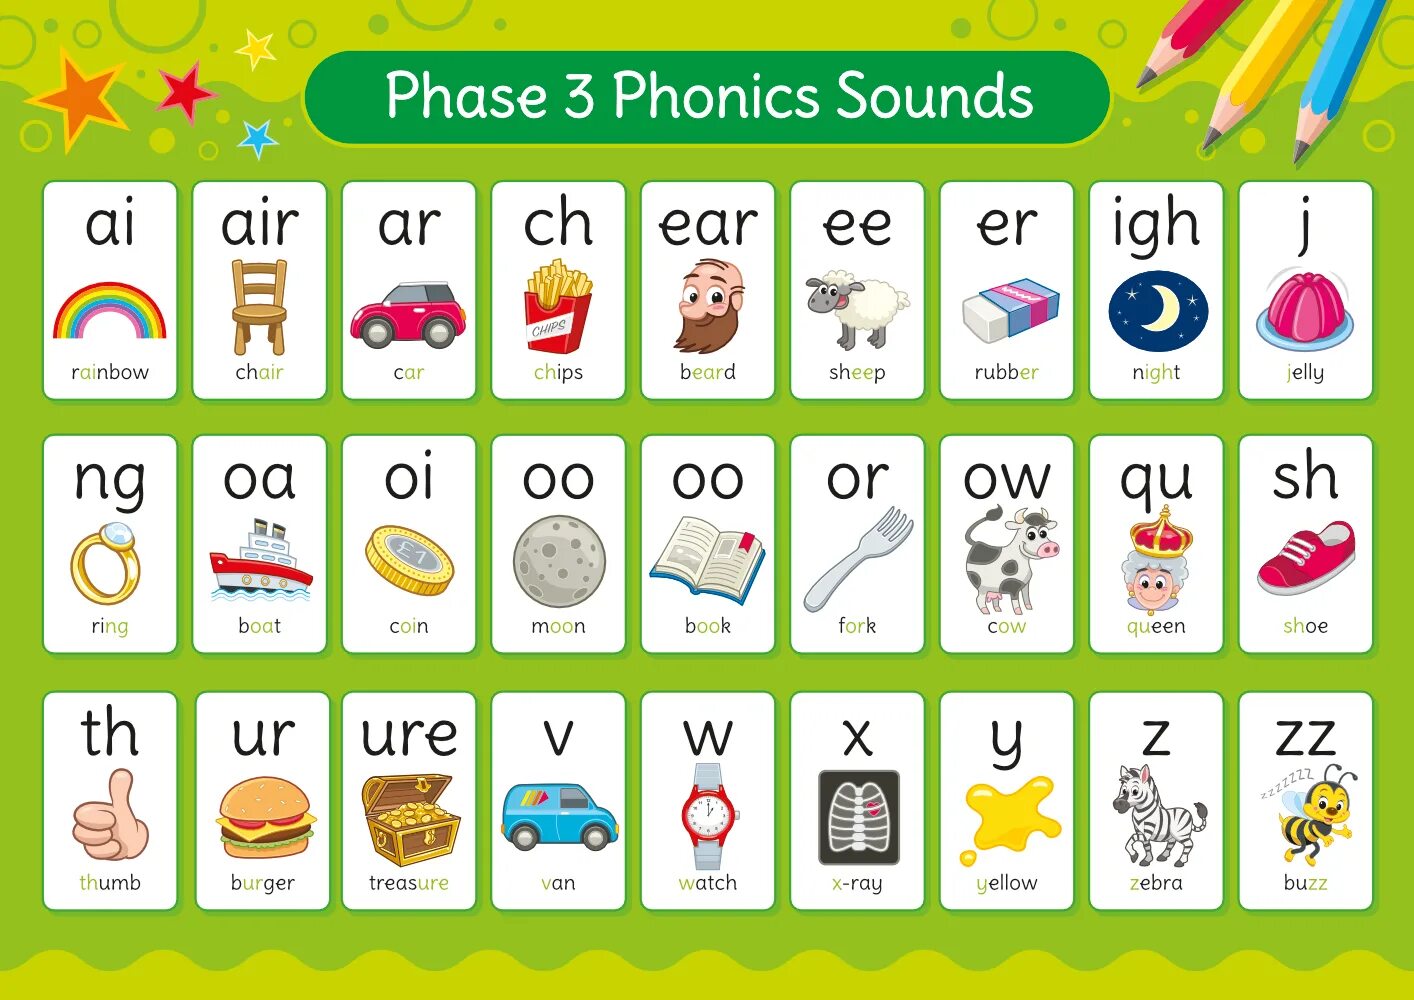 Share sounds. Phonics. Phase 3 Phonics. Phonic Sounds. Phase 2 Phonics Sounds.